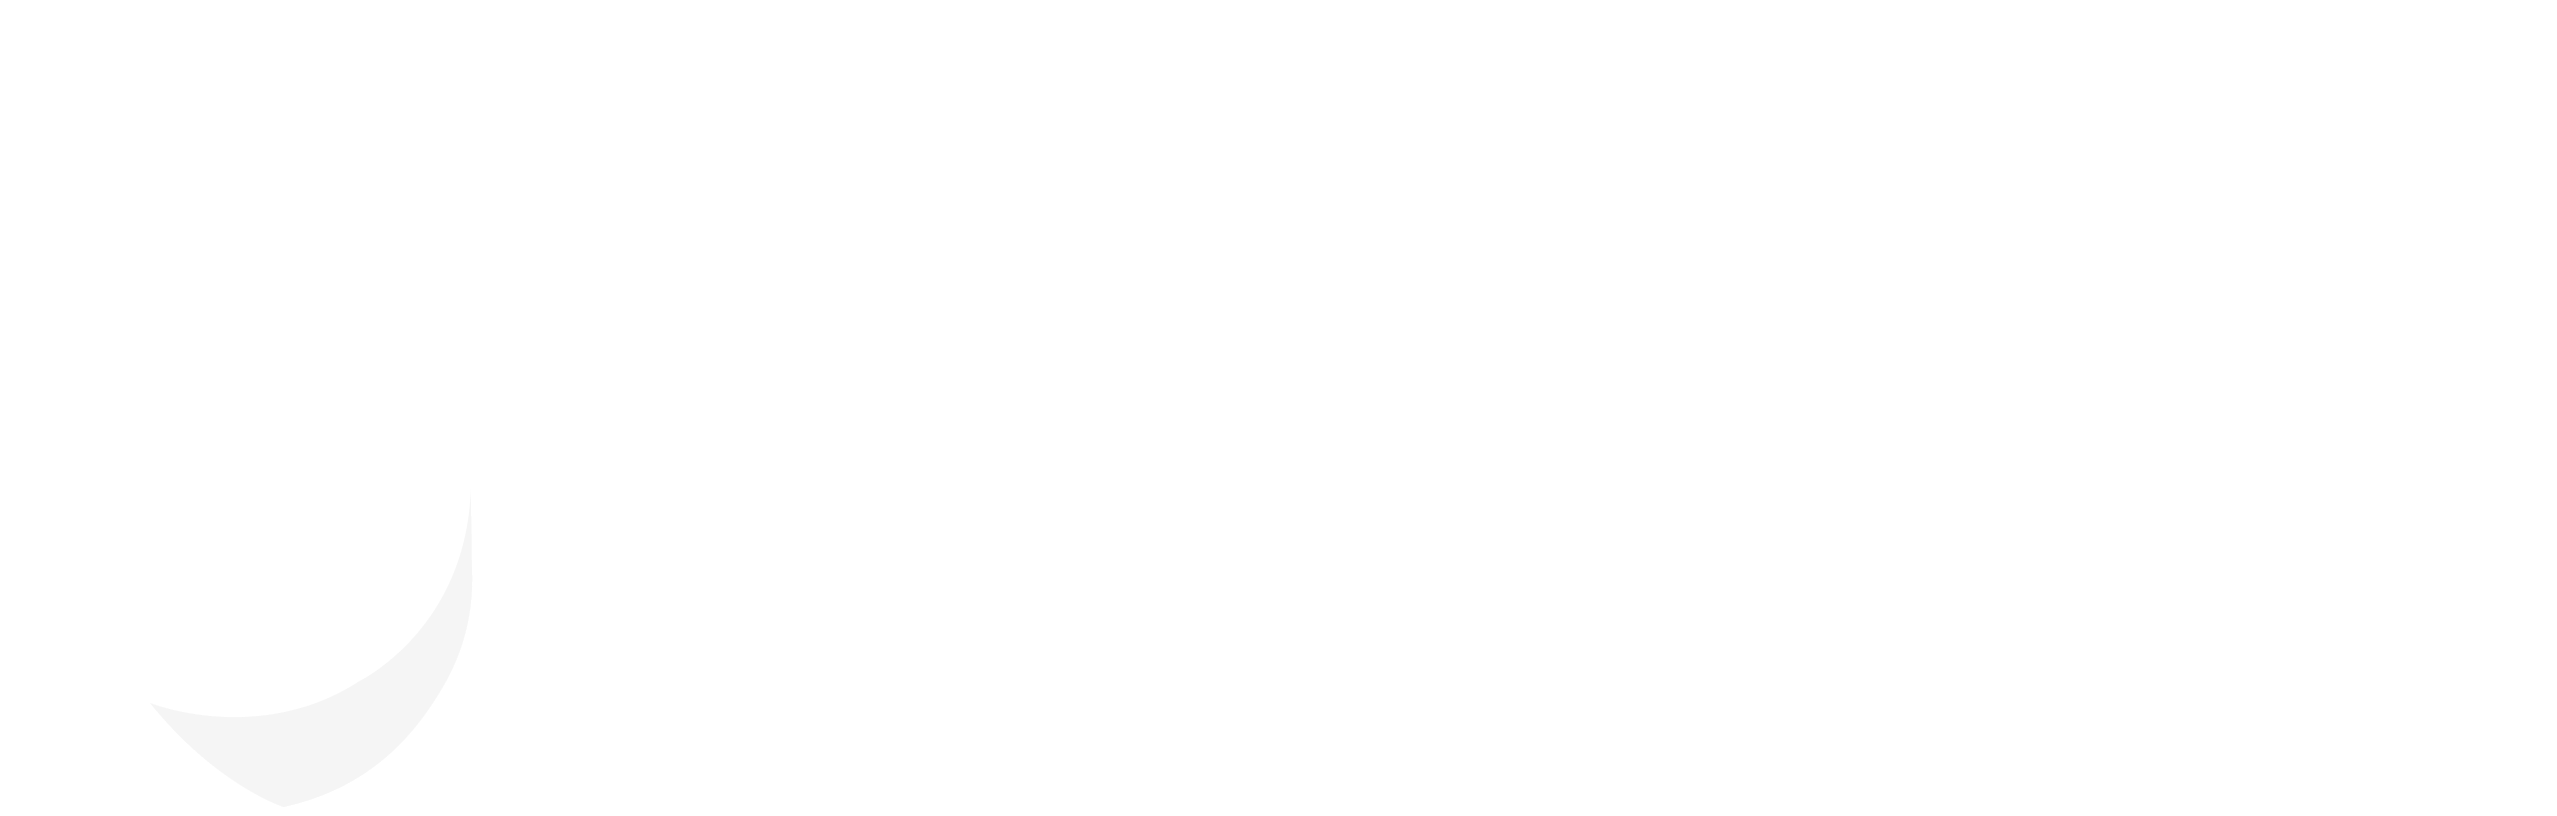 Uforya Medical